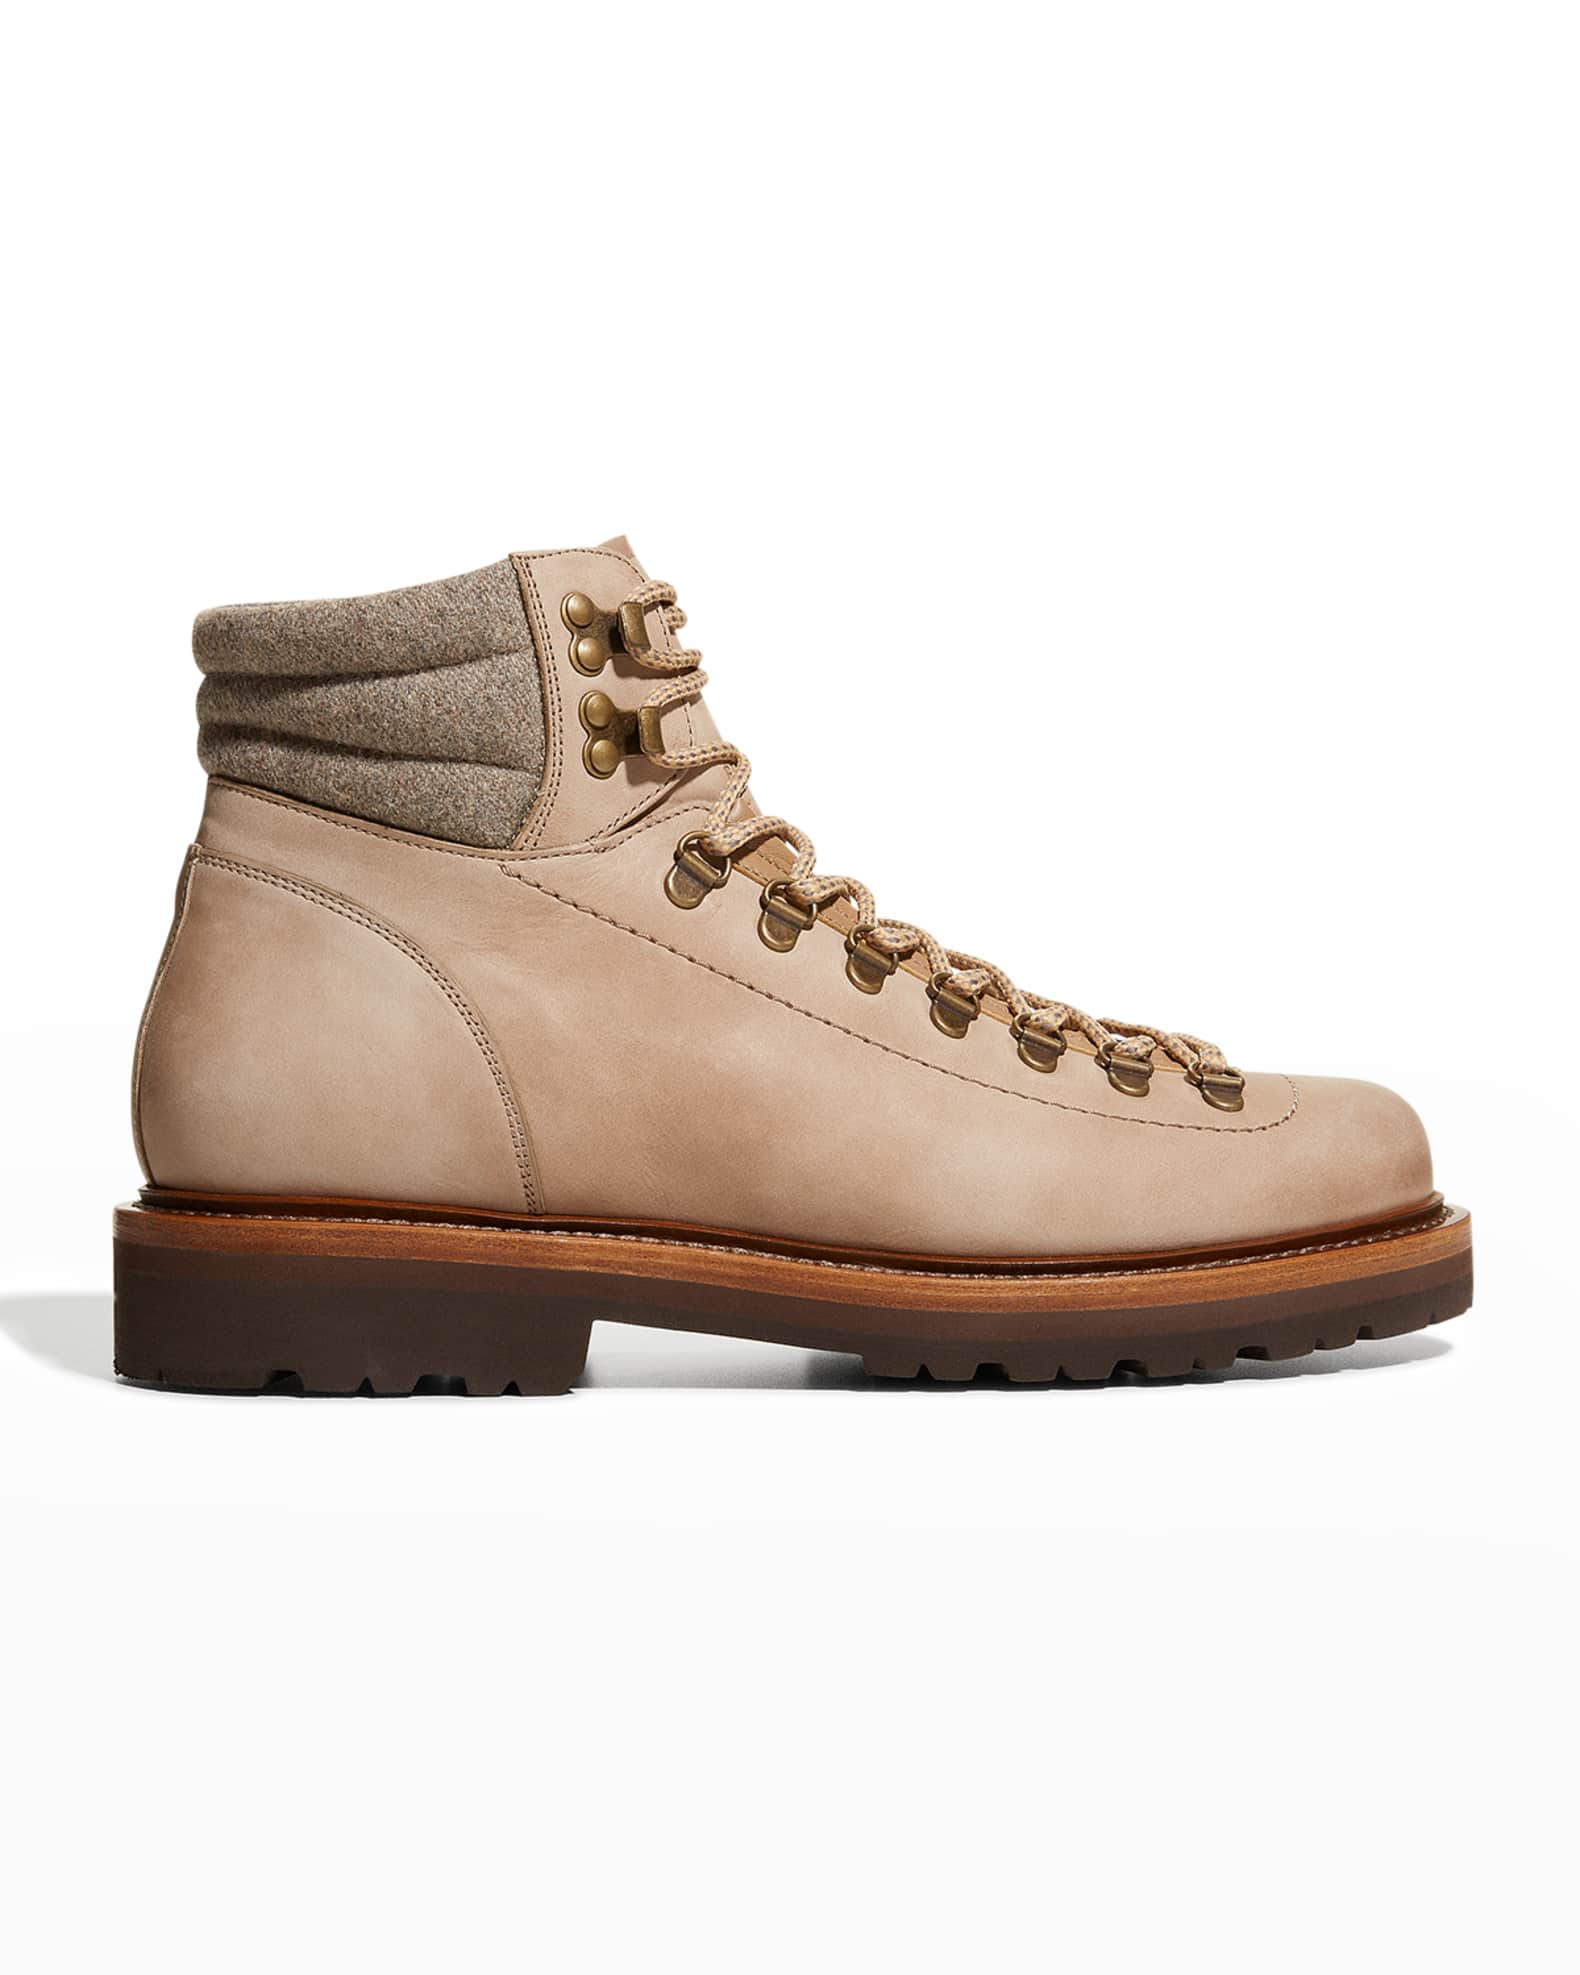 Brunello Cucinelli Men's Nubuck Leather Hiking Boots | Neiman Marcus